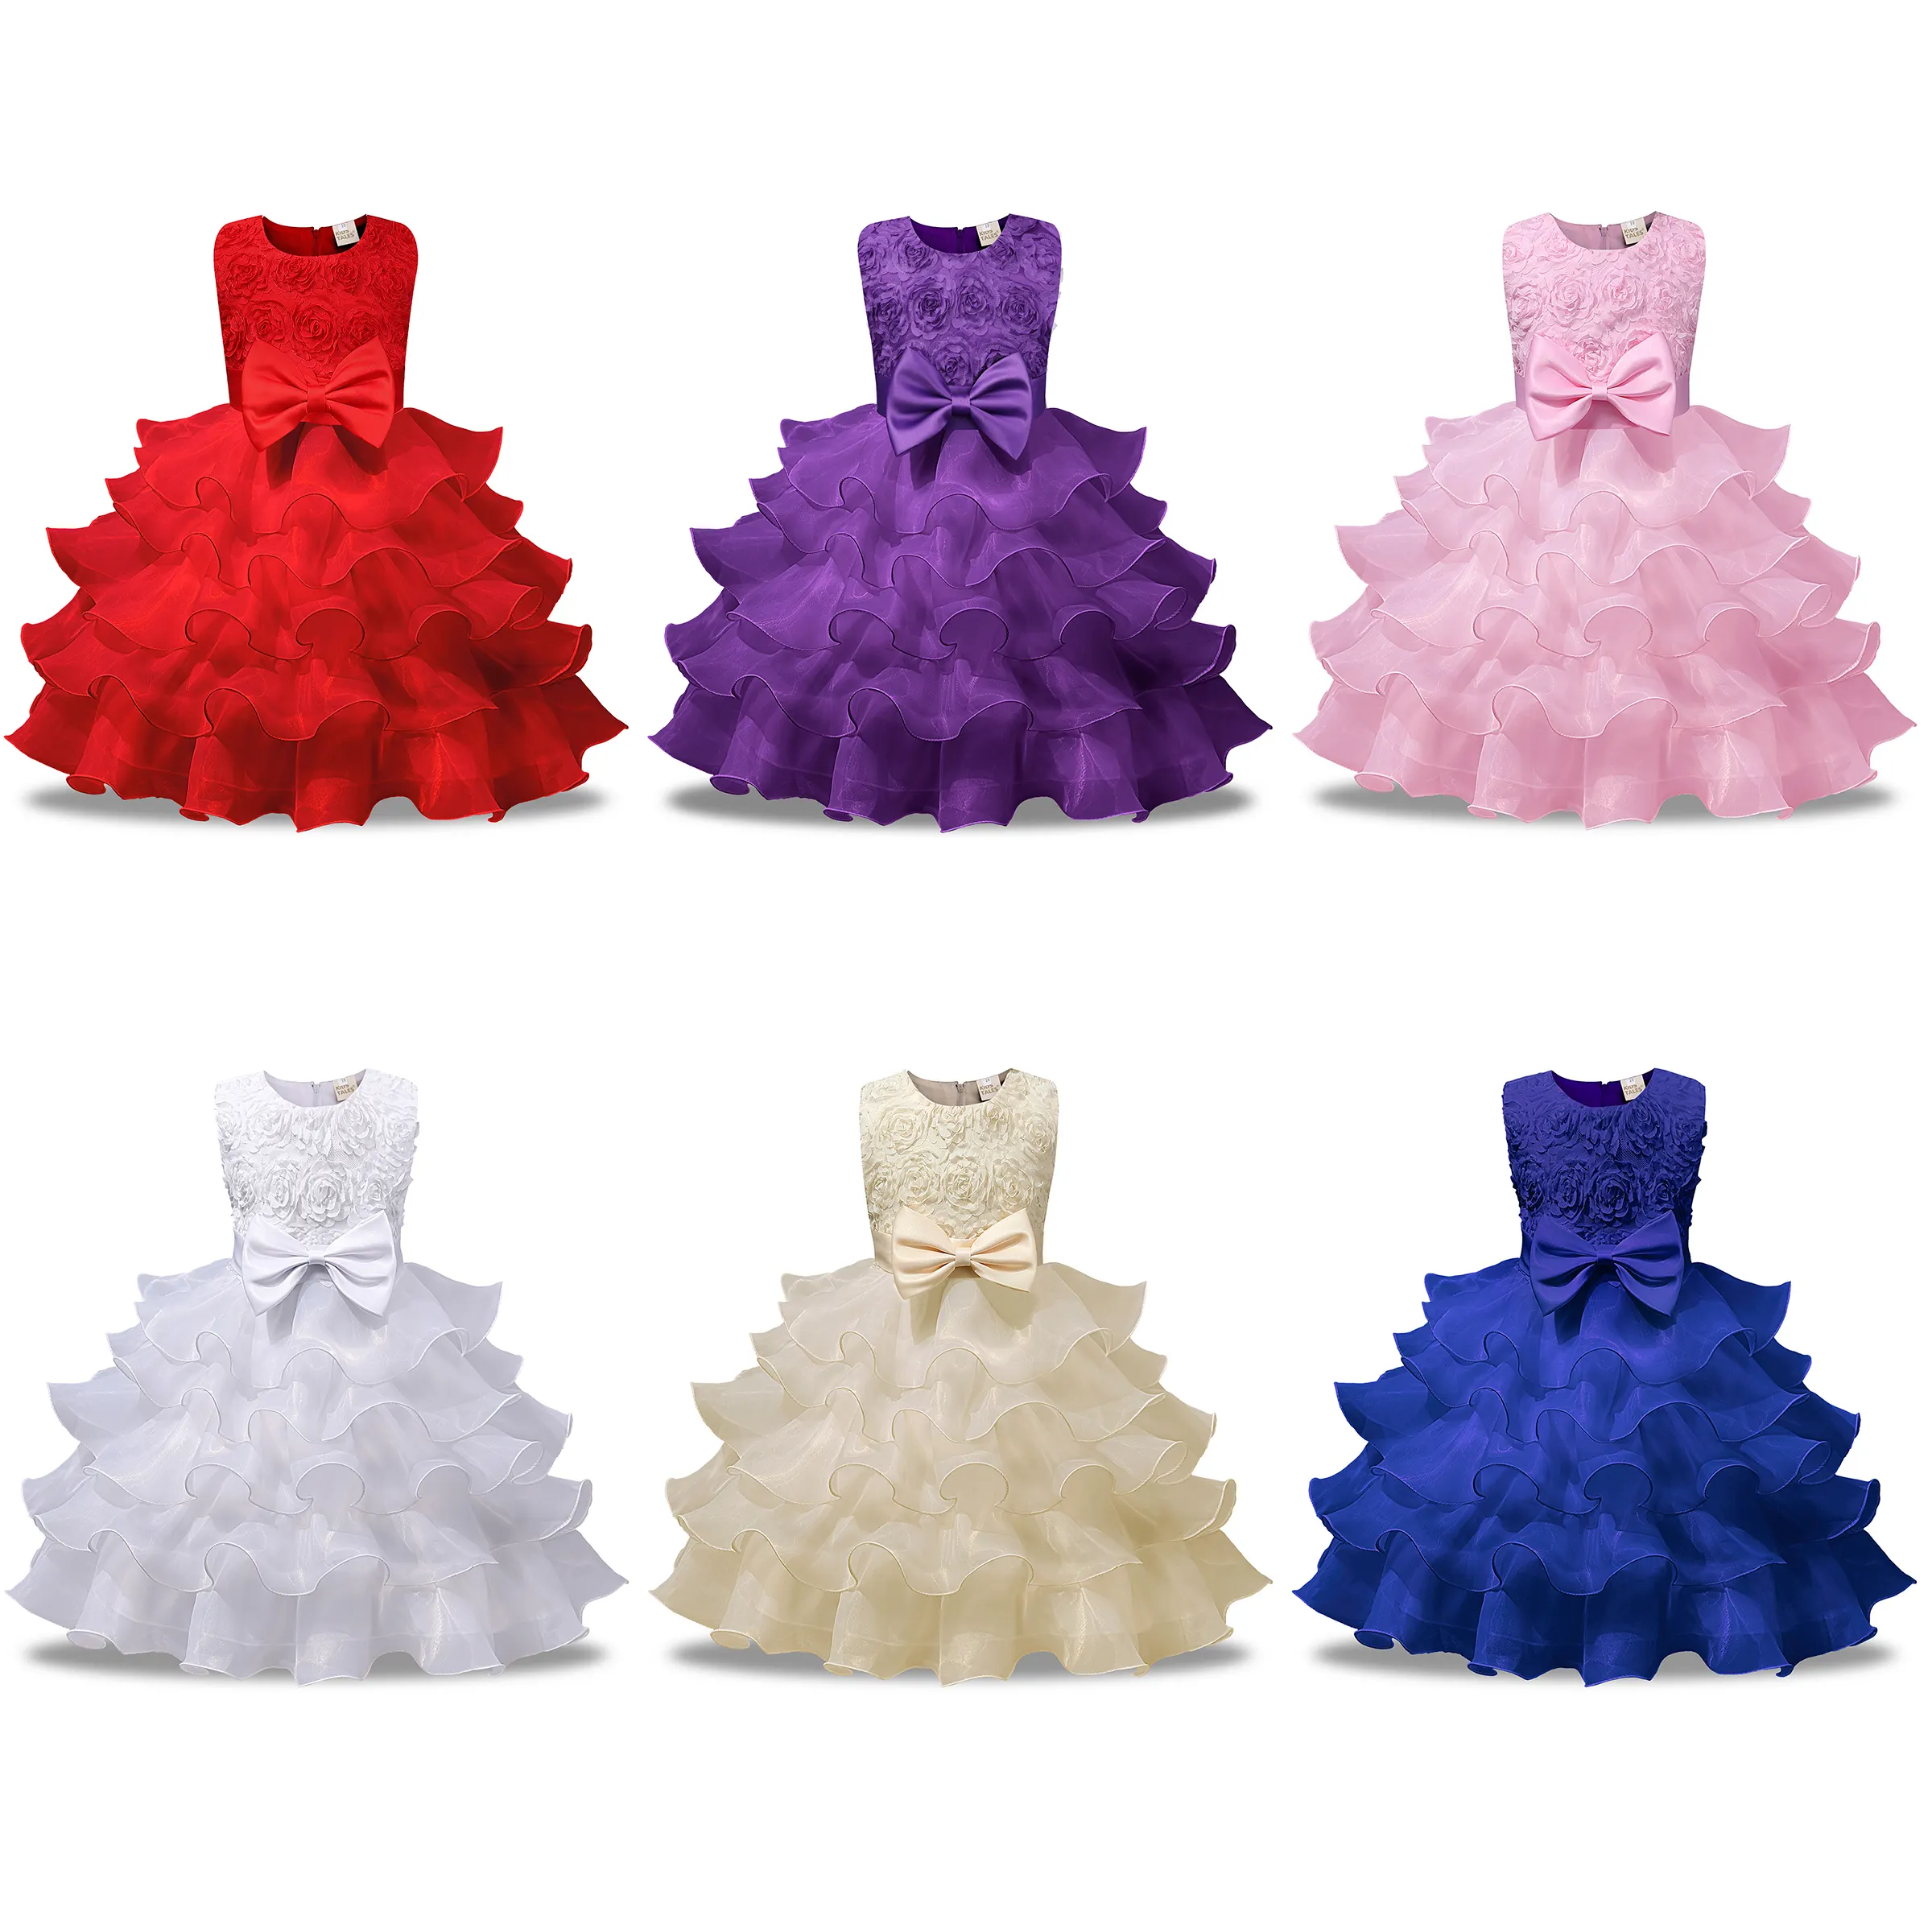 Summer sleeveless princess dress satin wholesale wedding birthday ball gown baby girl dresses party